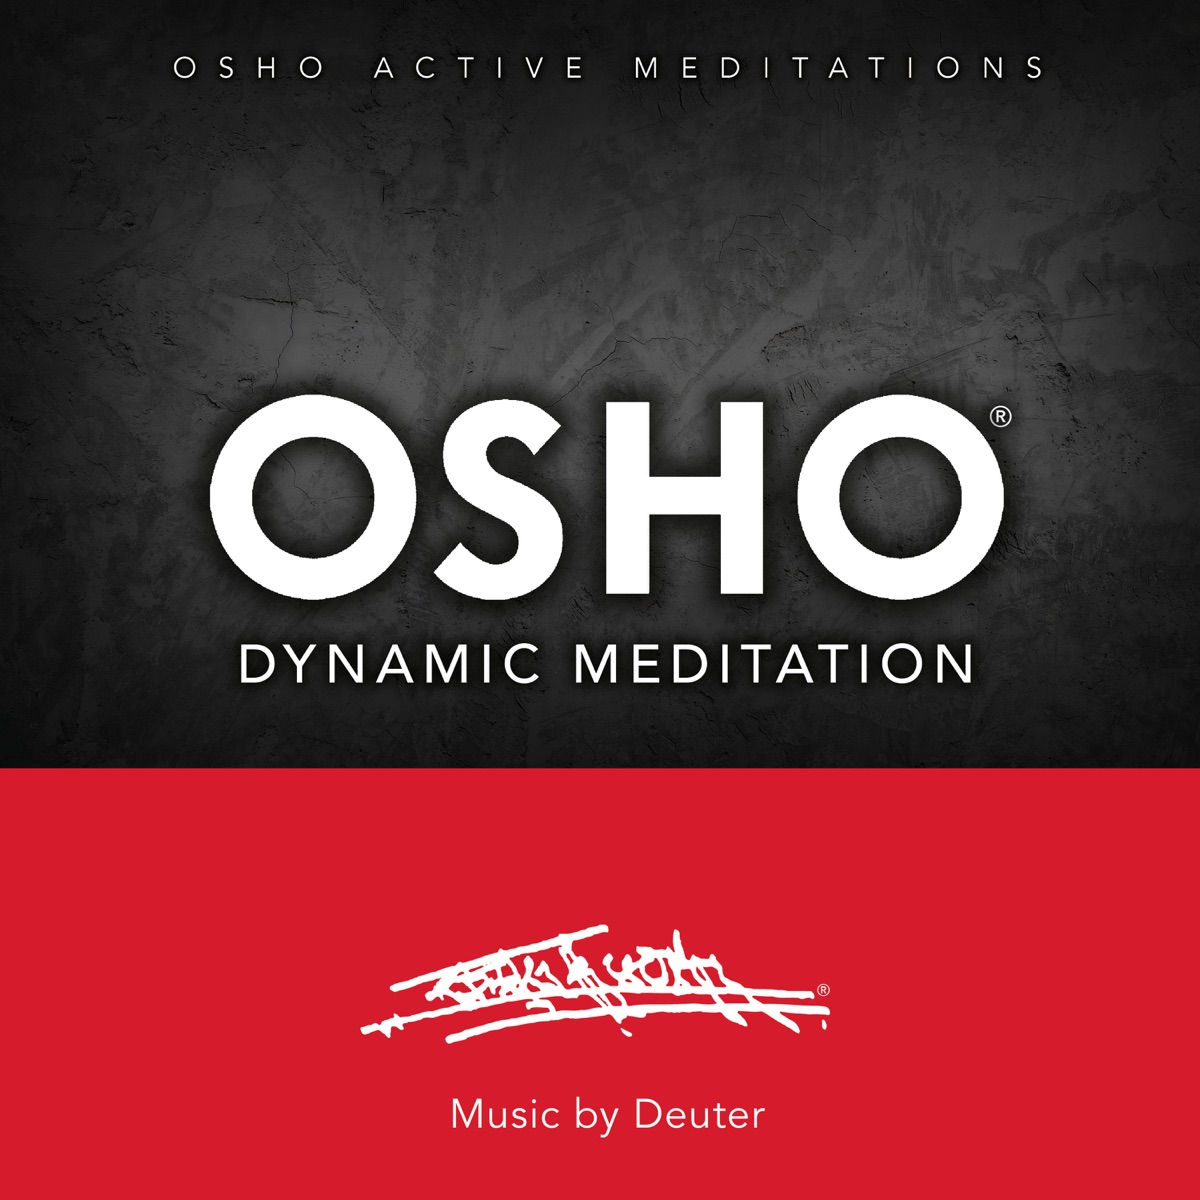 Osho Dynamic Meditation (Osho Active Meditations) - Album by Osho & Deuter  - Apple Music